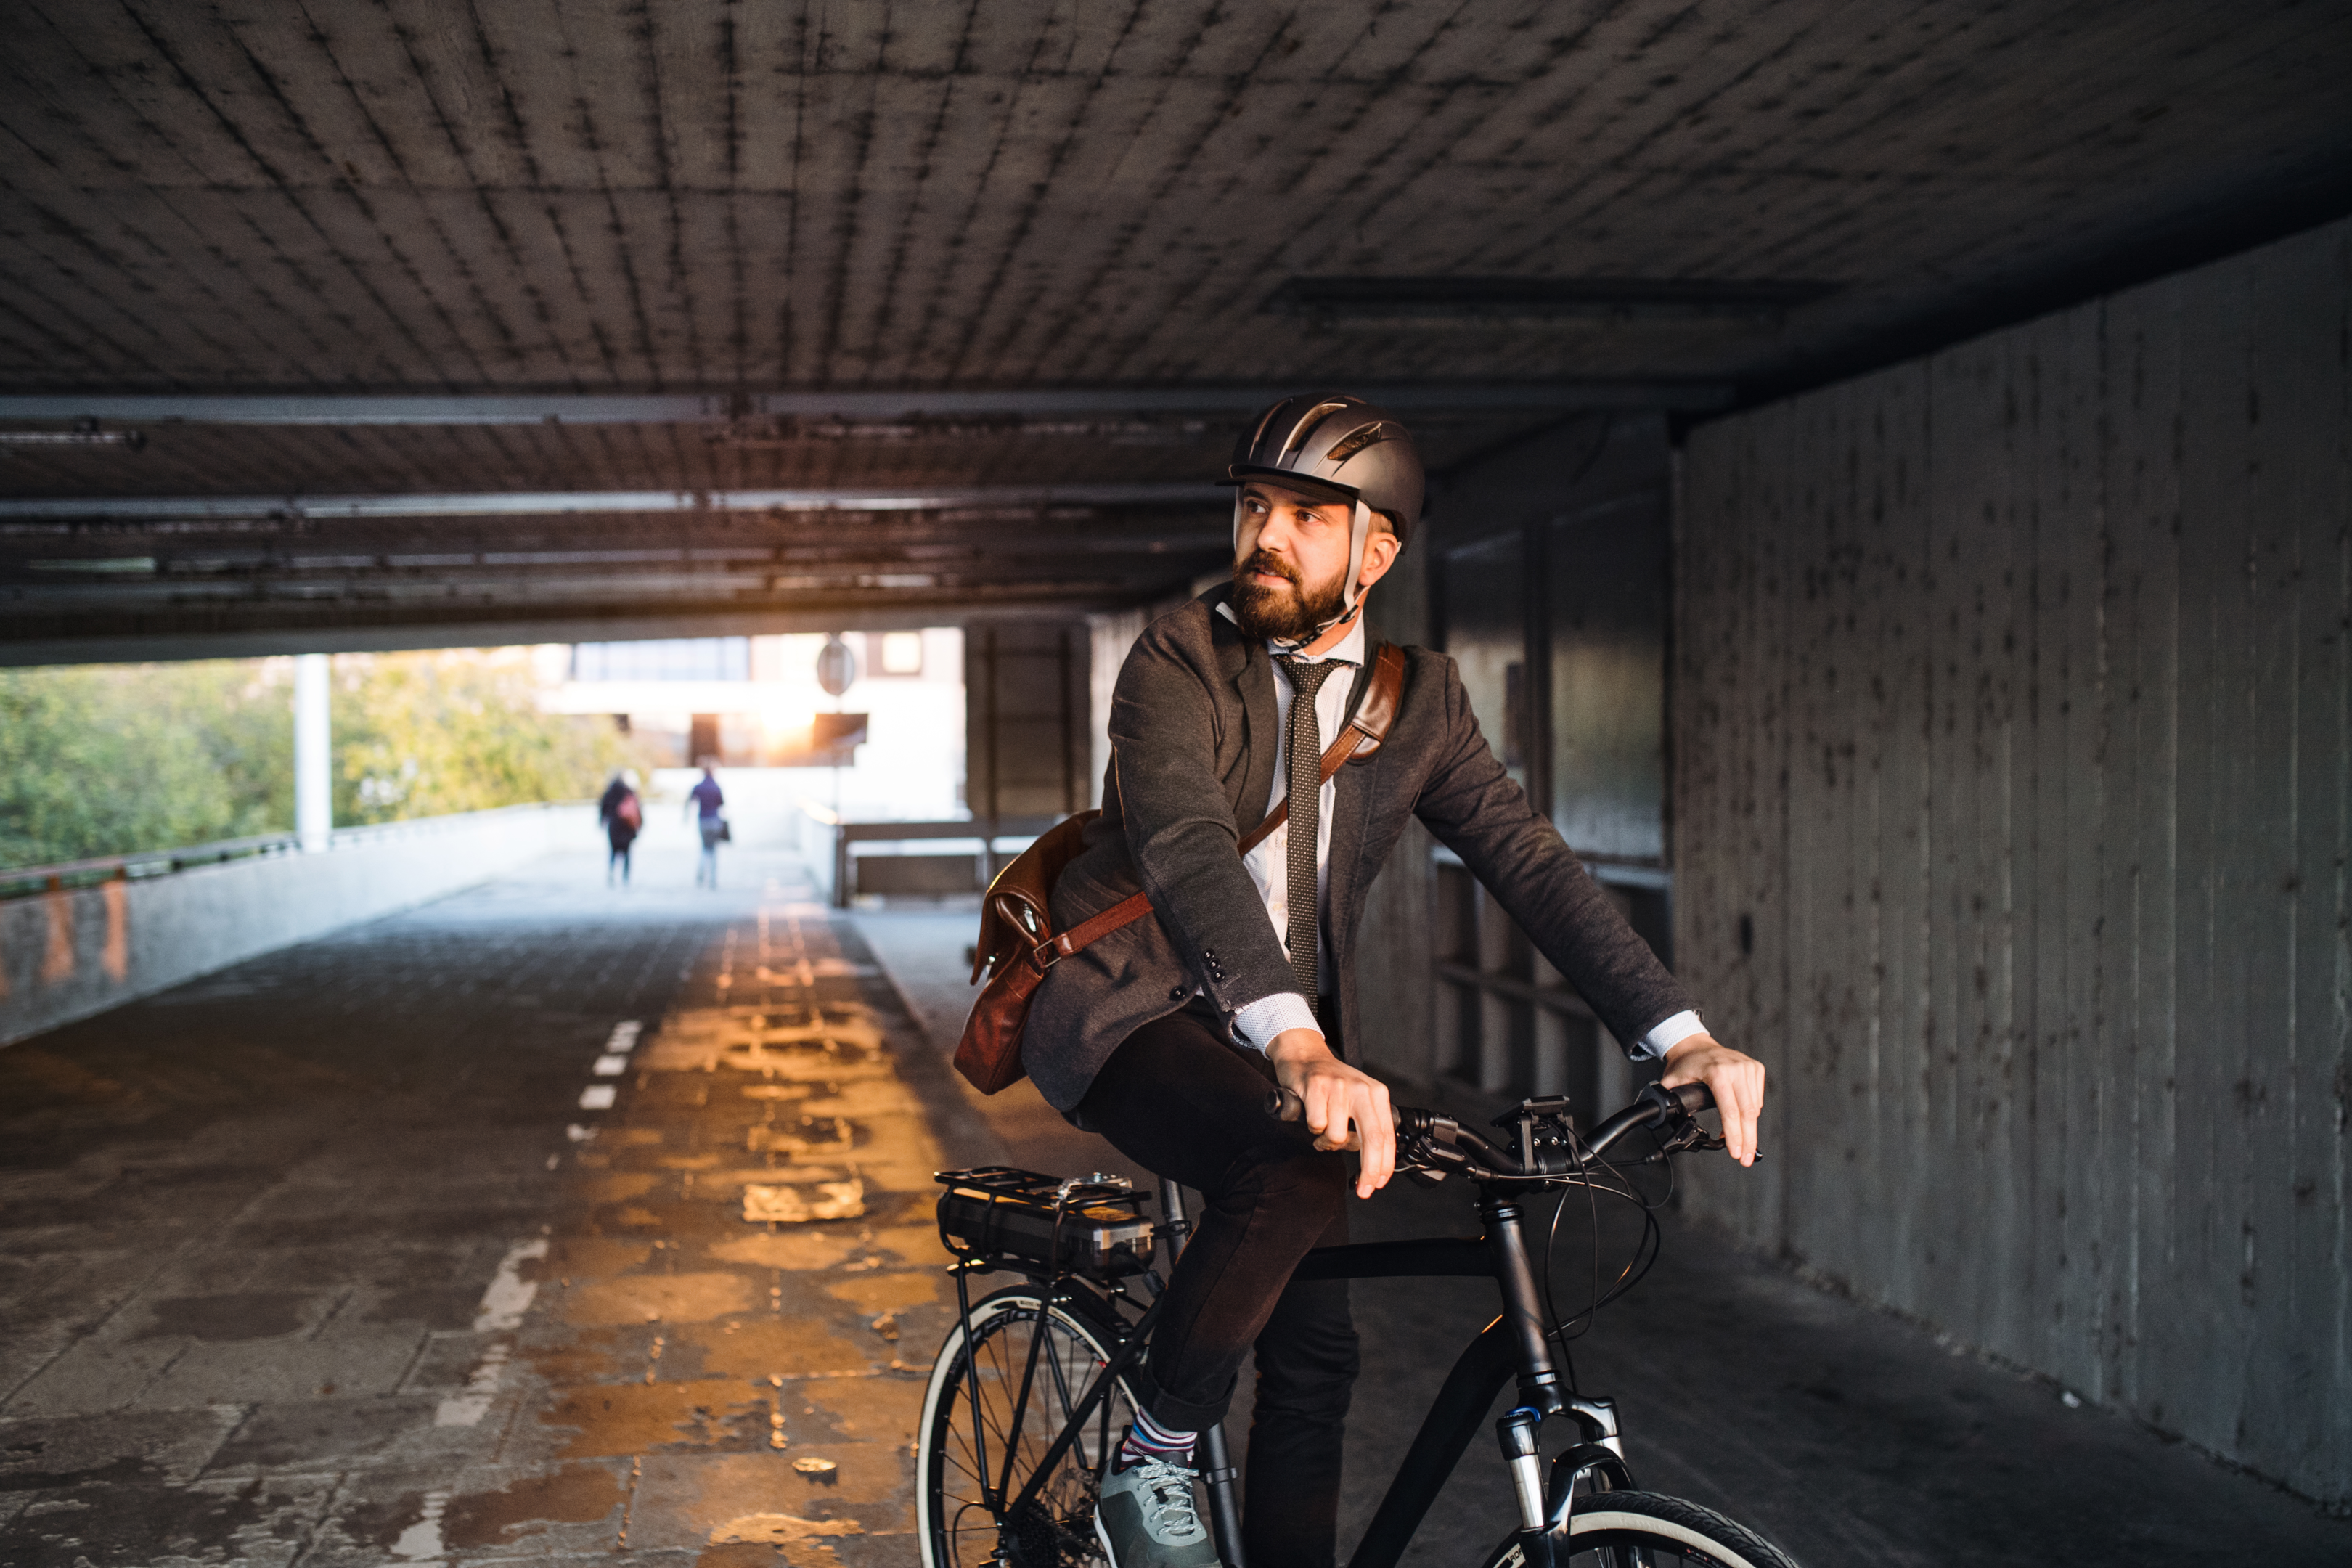 A man riding an electric bike on a city street